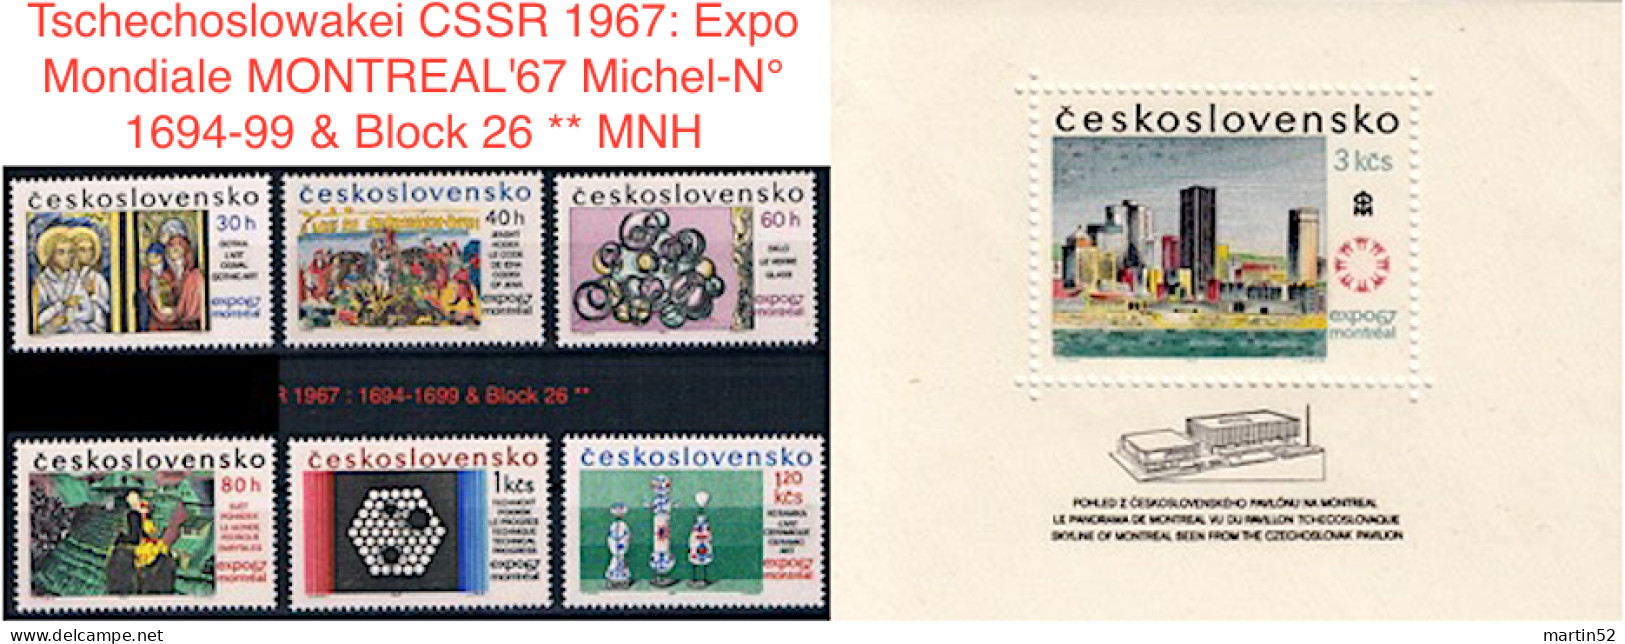 Tschechoslowakei CSSR 1967: Expo Mondiale MONTREAL'67 Michel-N° 1694-99 & Block 26 ** MNH (NOTA BENE) - 1967 – Montreal (Kanada)